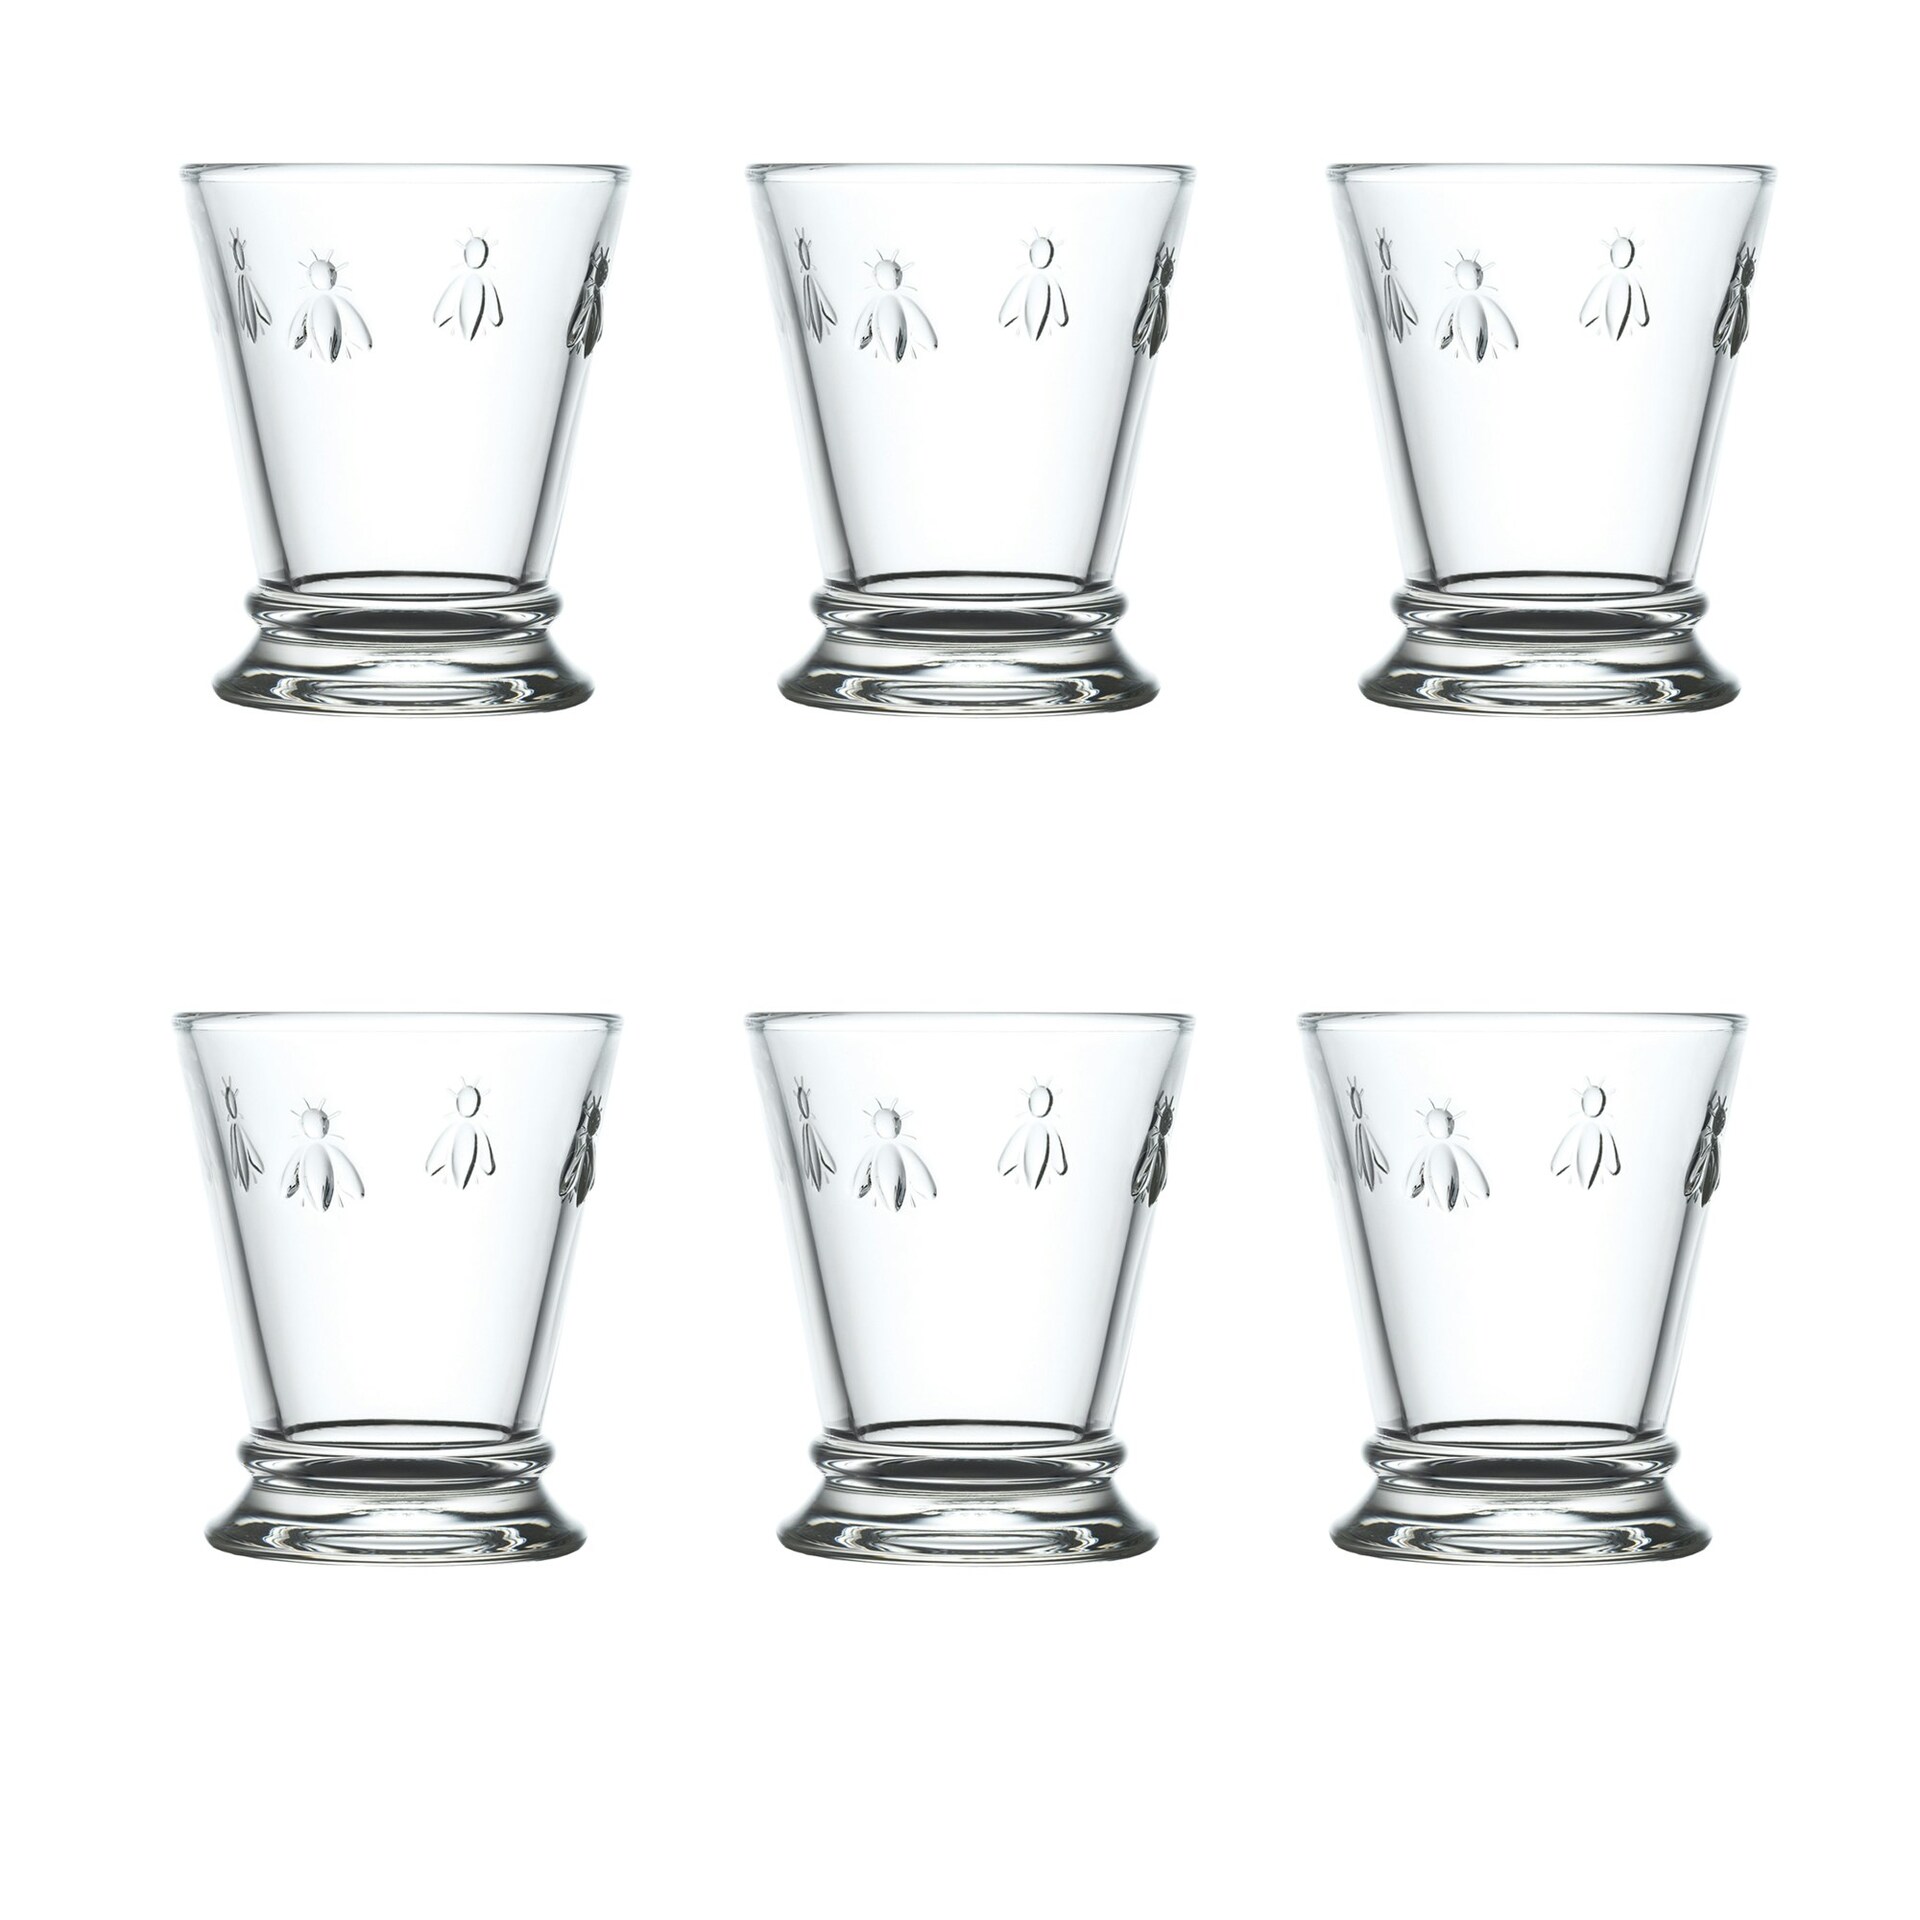 https://royaldesign.com/image/2/la-rochere-abeille-drinking-glass-185-cl-6-pack-0